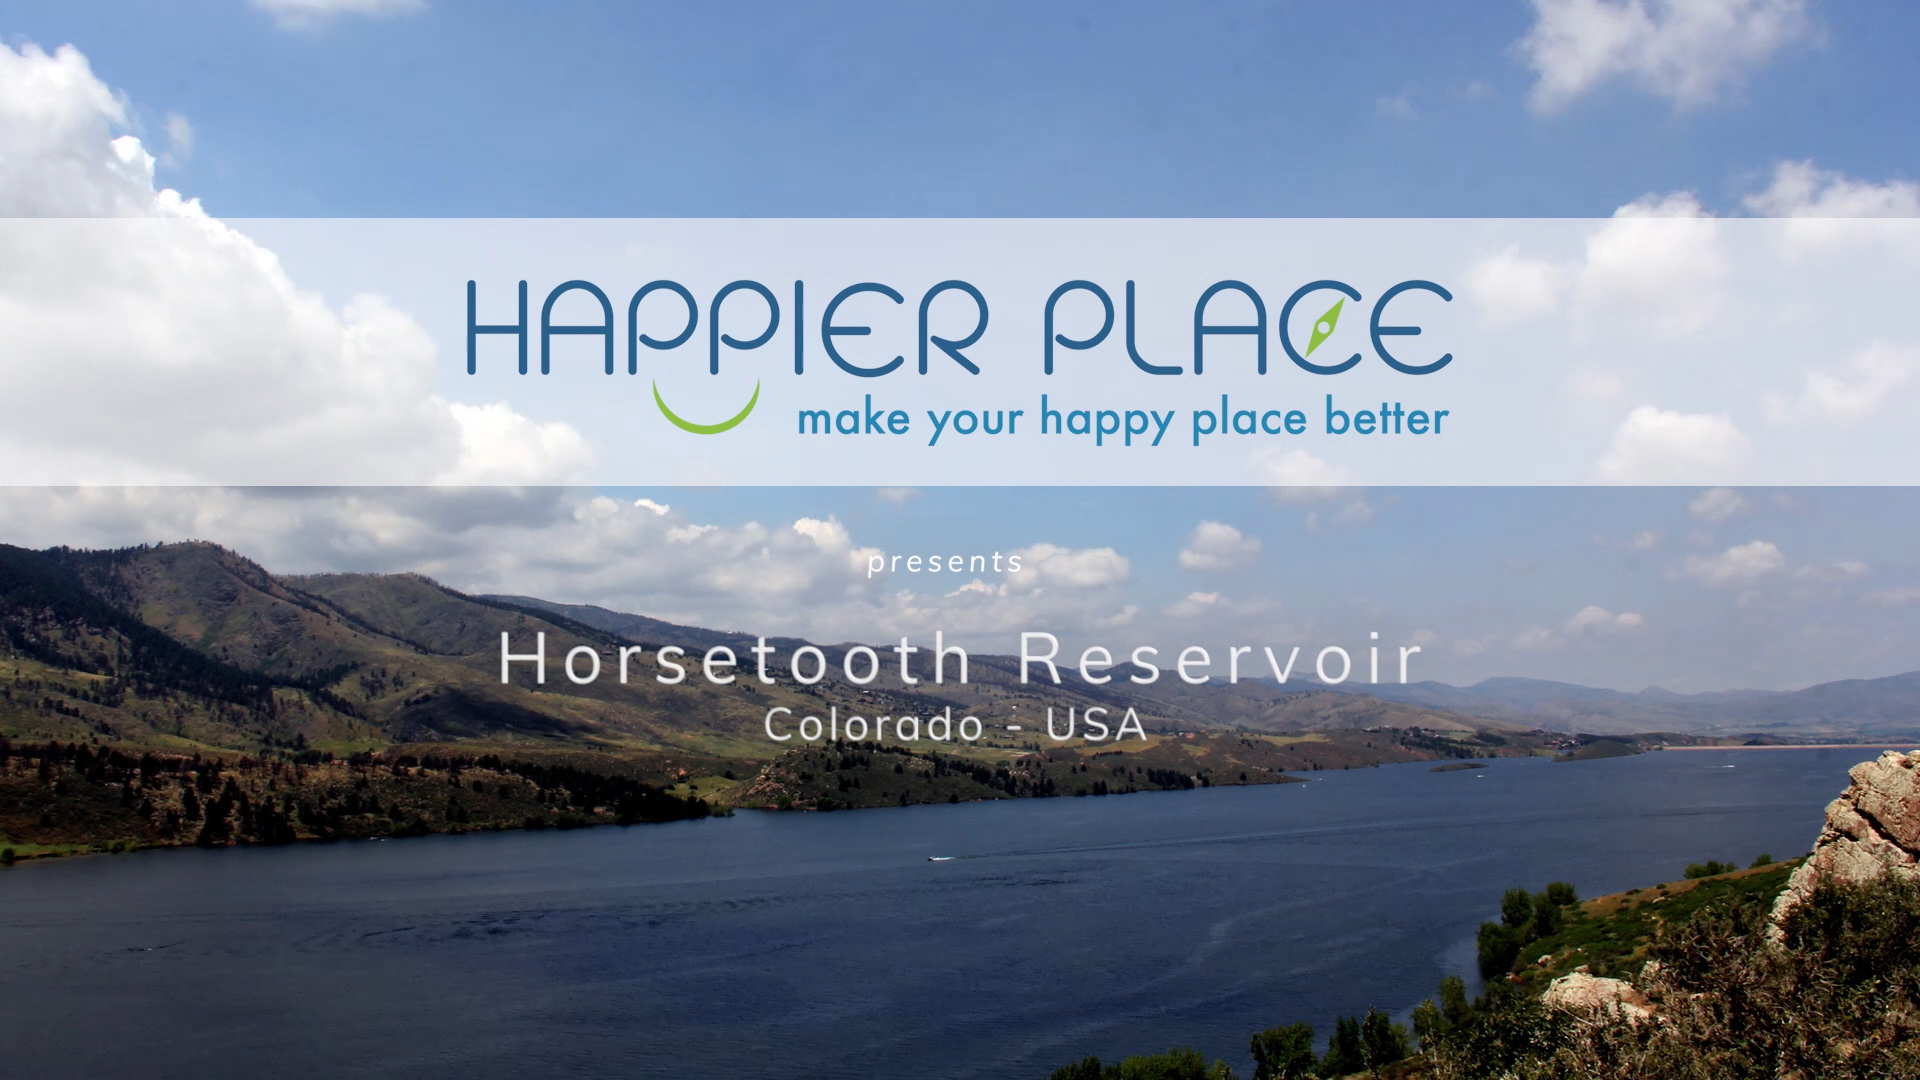 Horsetooth Reservoir - Colorado - Happier Place